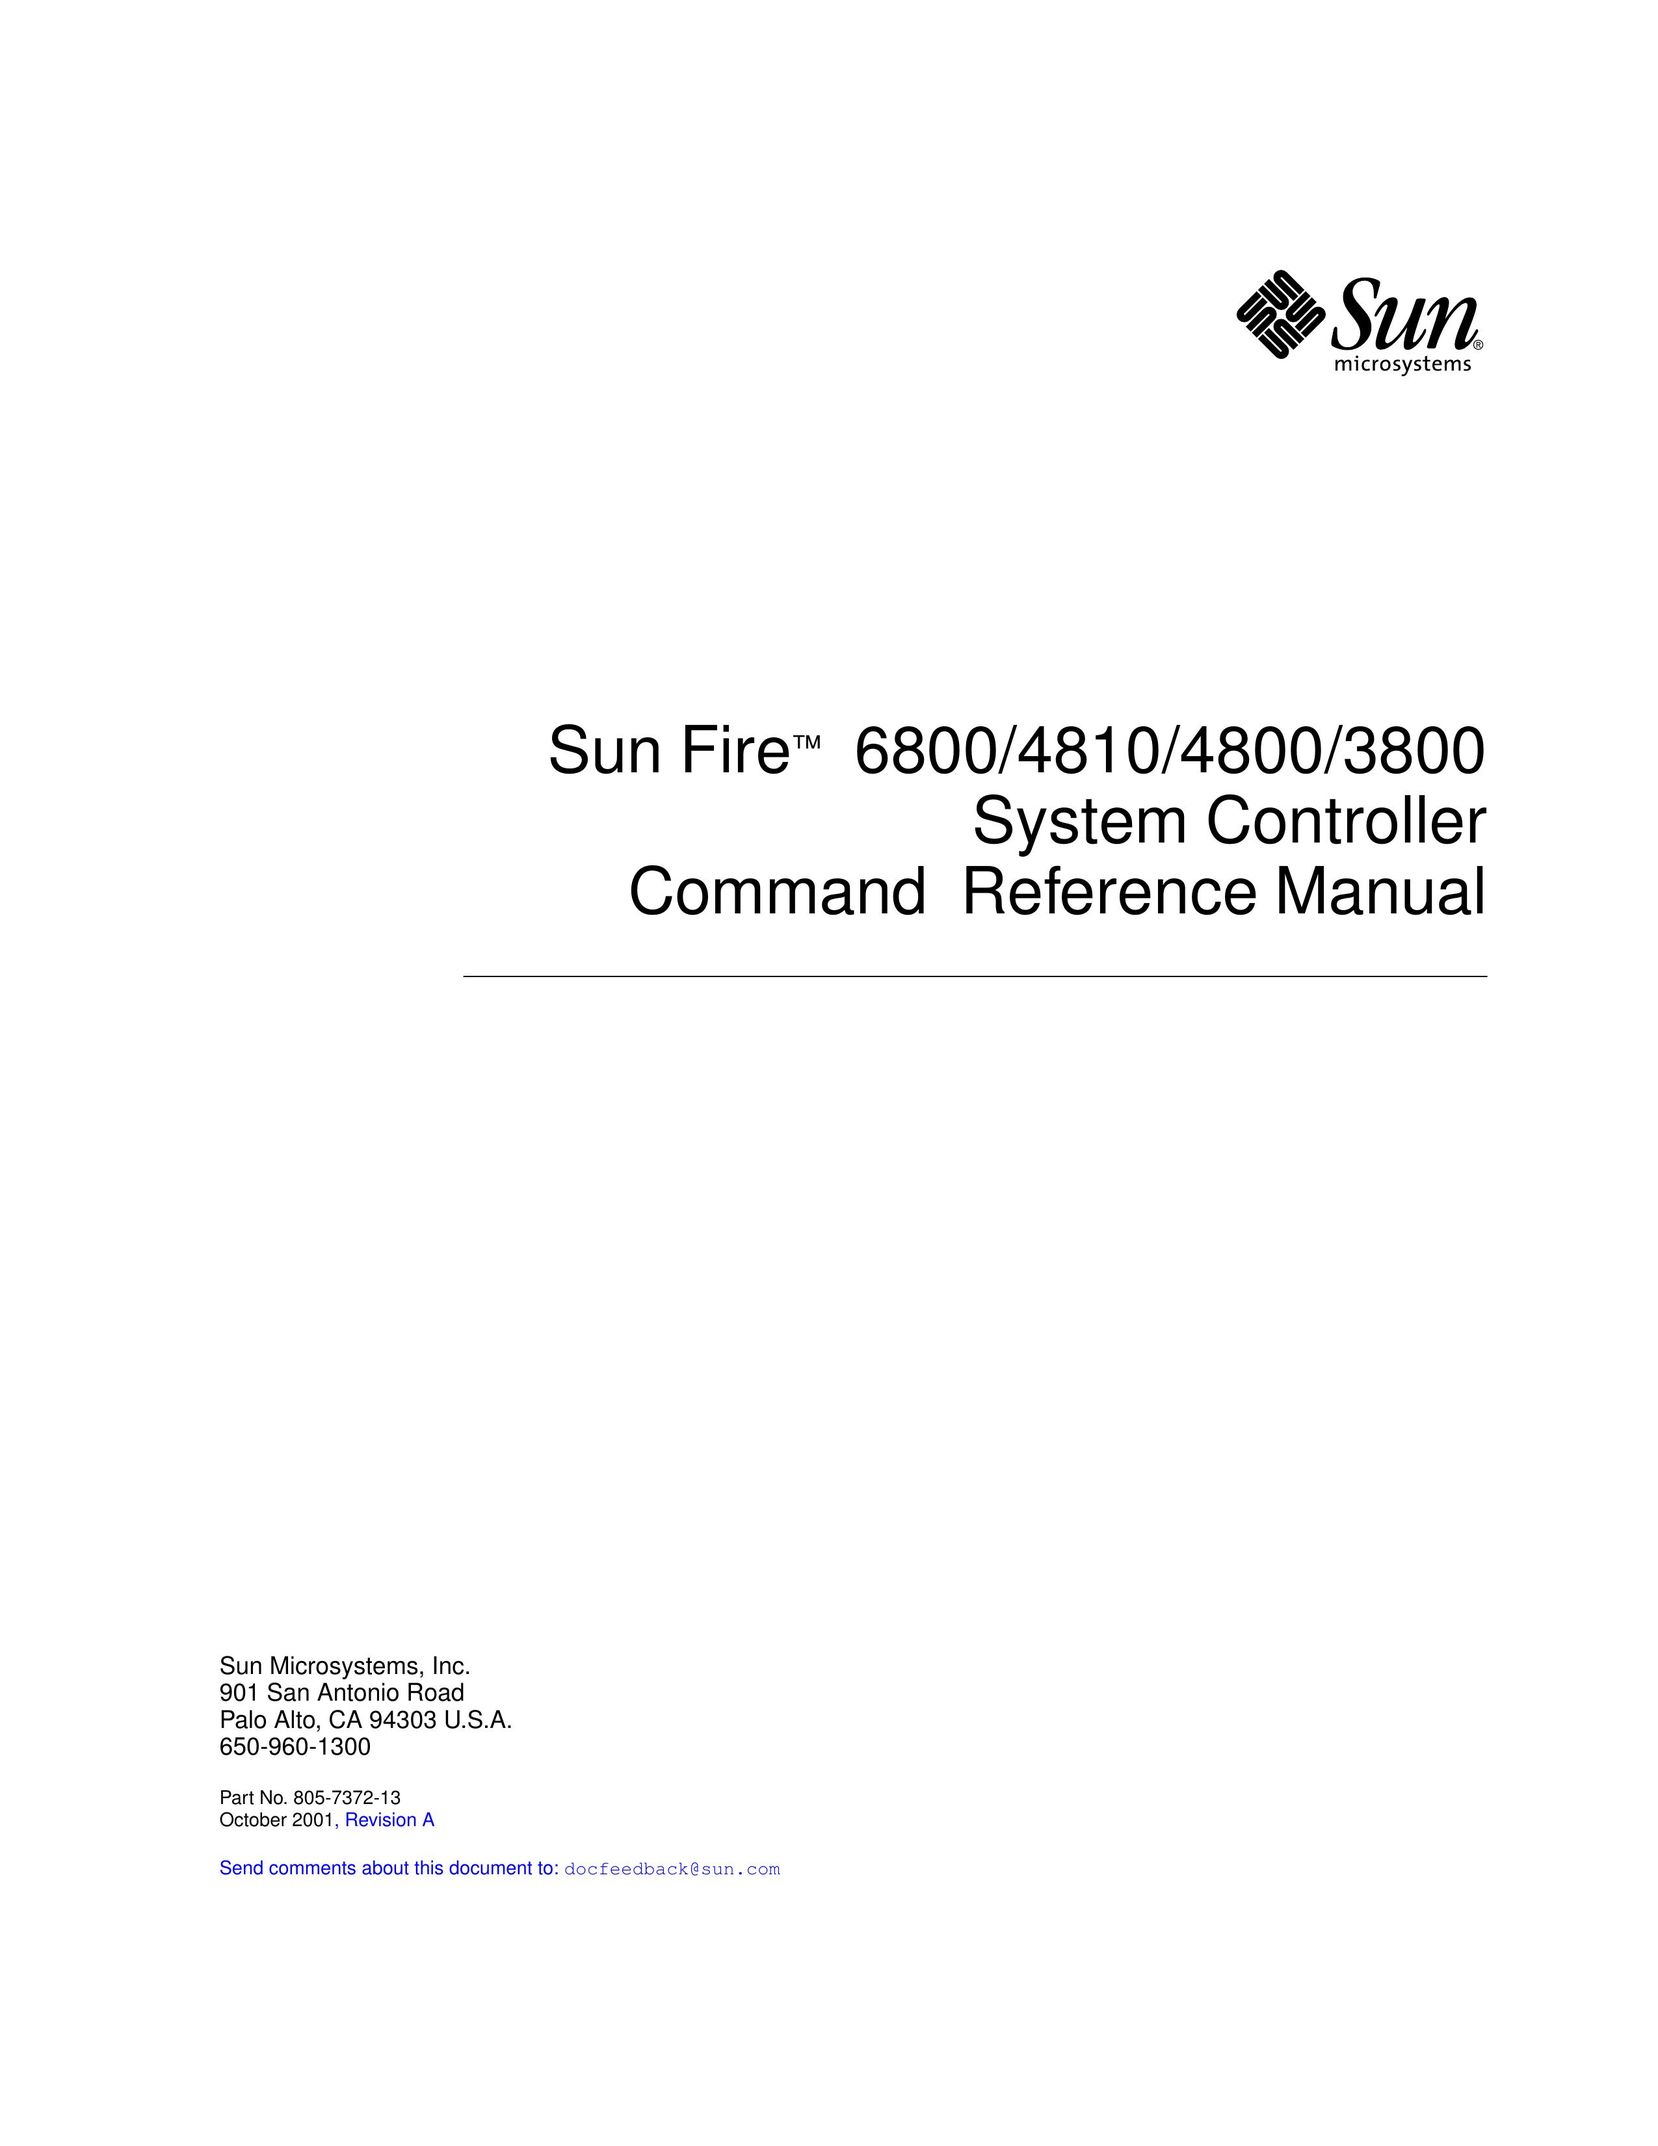 Sun Microsystems 6800/4810/4800/3800 Welding System User Manual